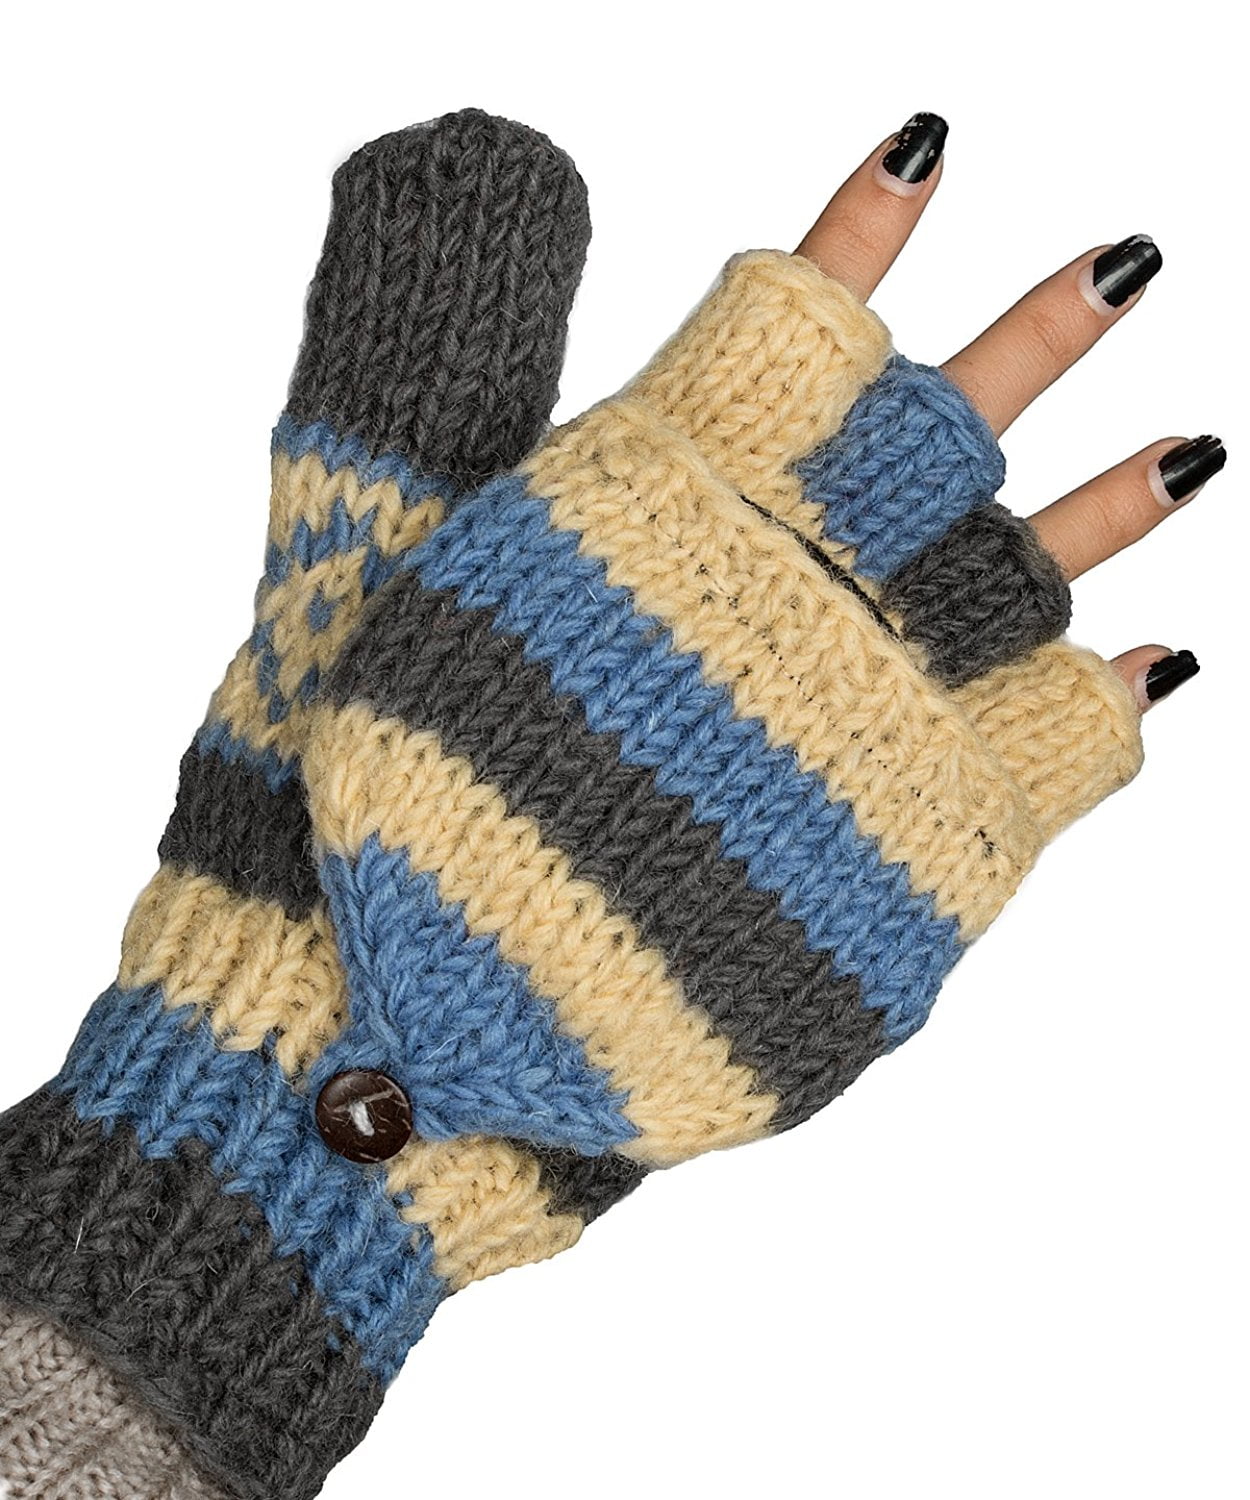 Accessoires Handschoenen & wanten Wanten & handmoffen | Charcoal Wool Gloves, Warm Fleece inside, great winter warmth : 